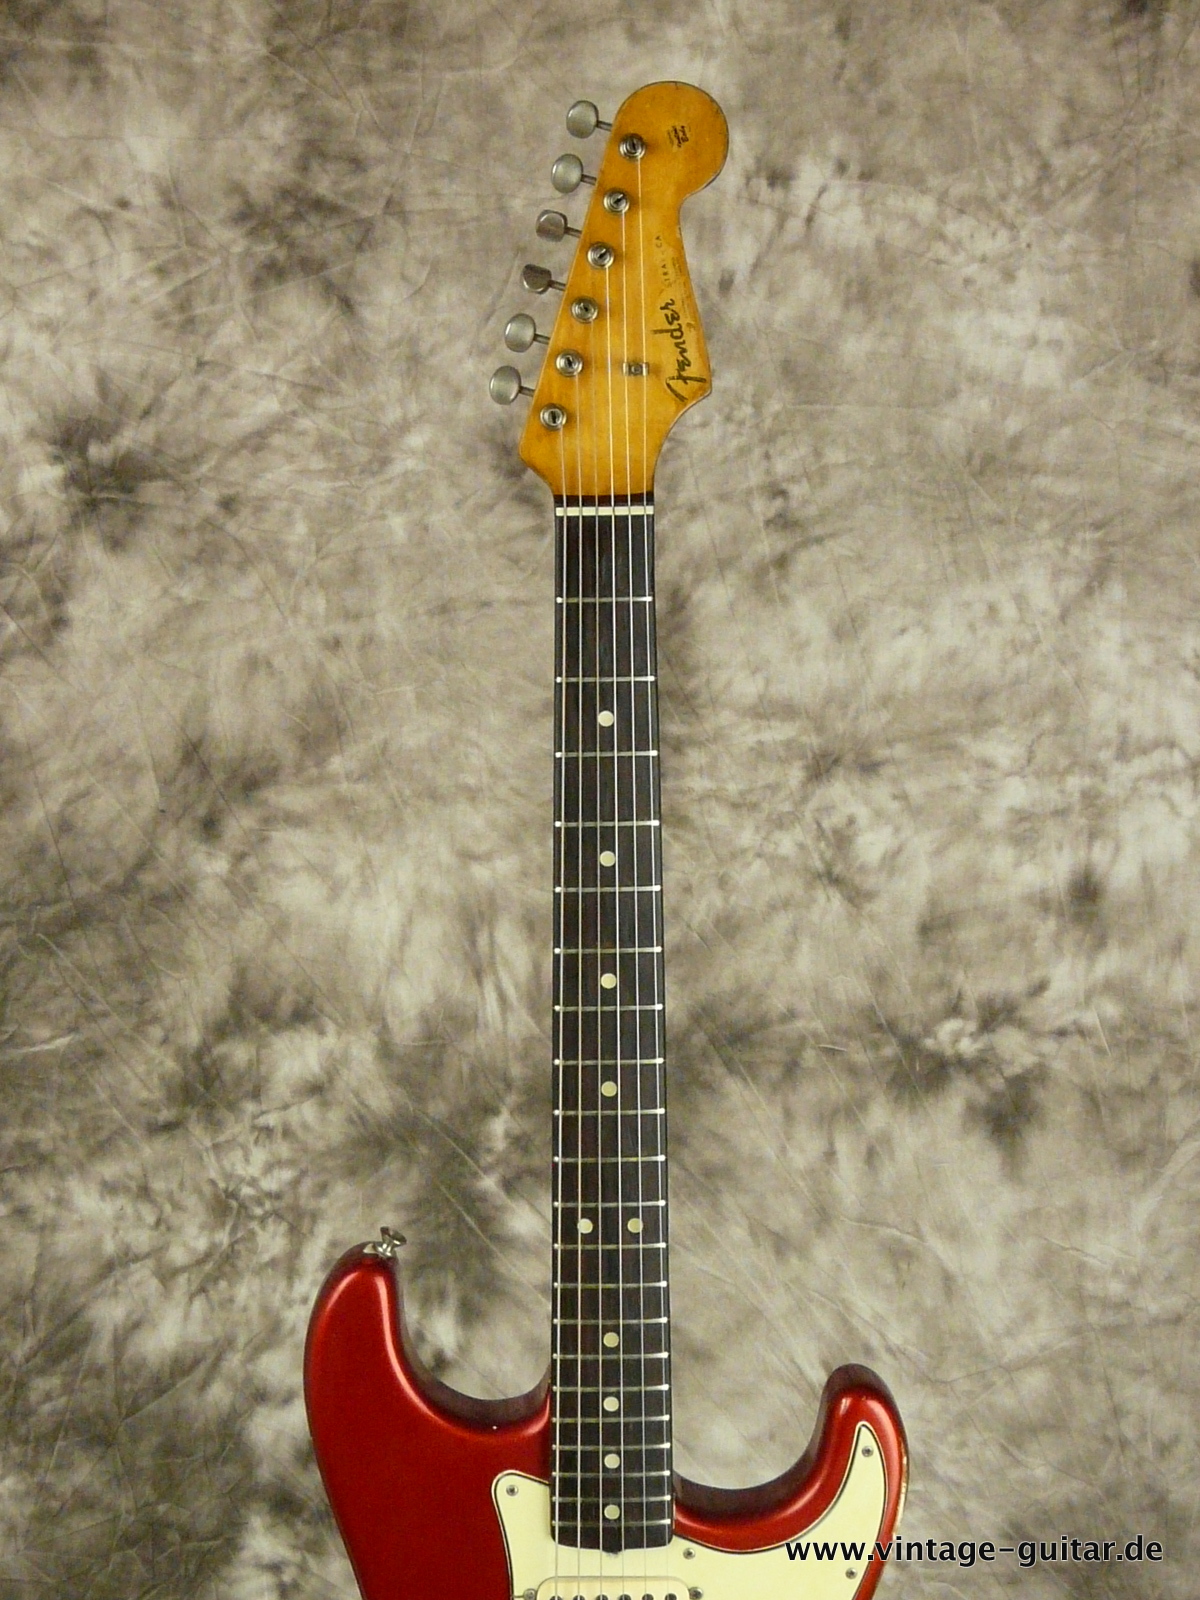 Fender_Stratocaster_candy-apple-red-1964-008.JPG